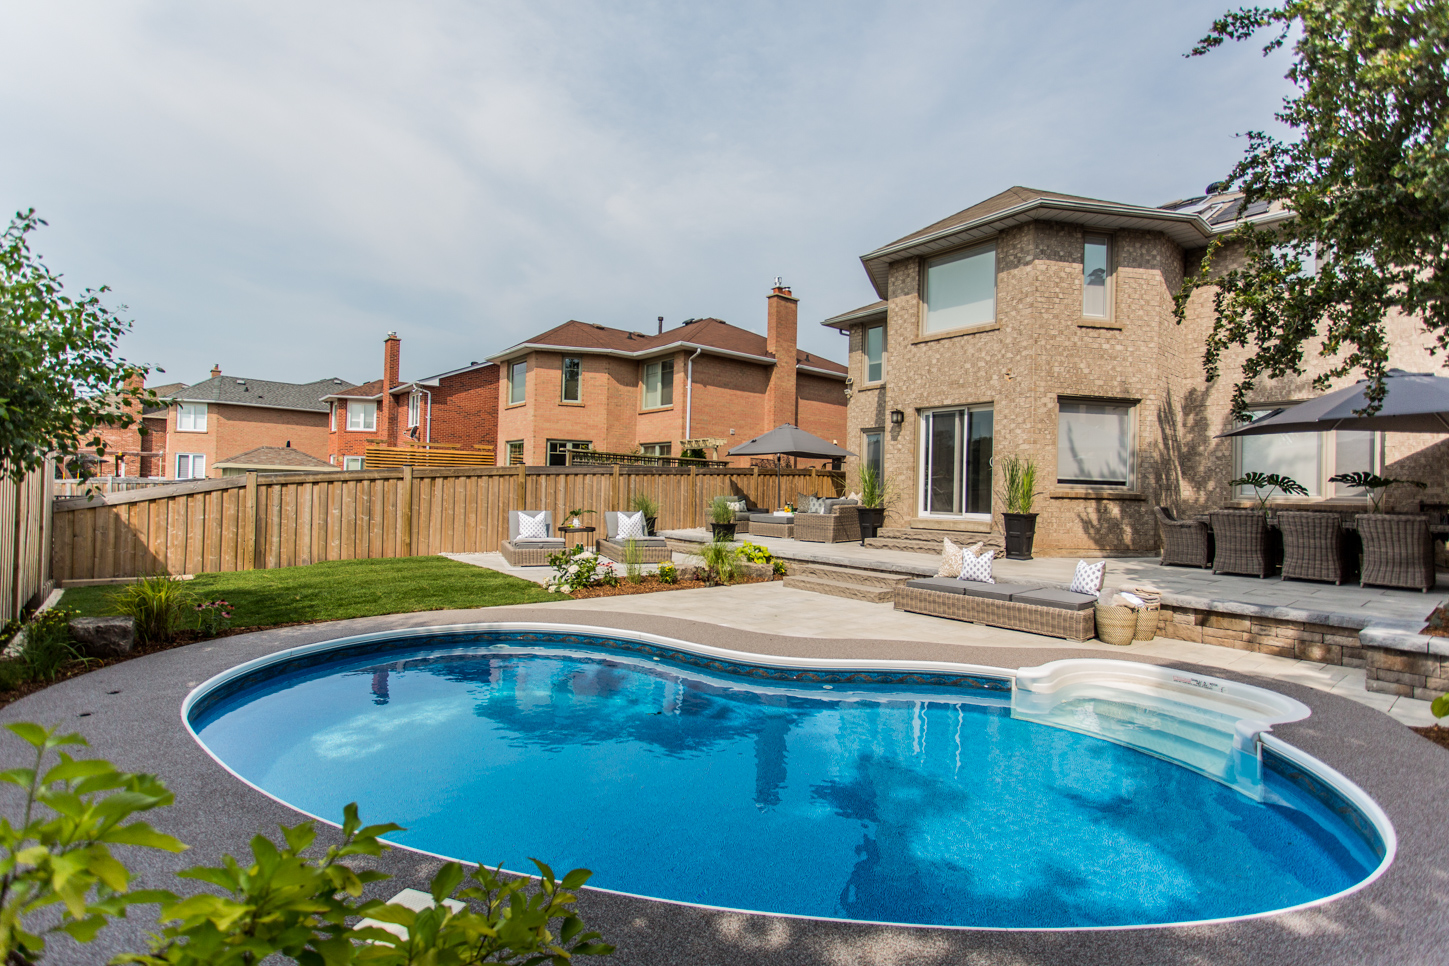 Backyard in suburbs with large swimming pool